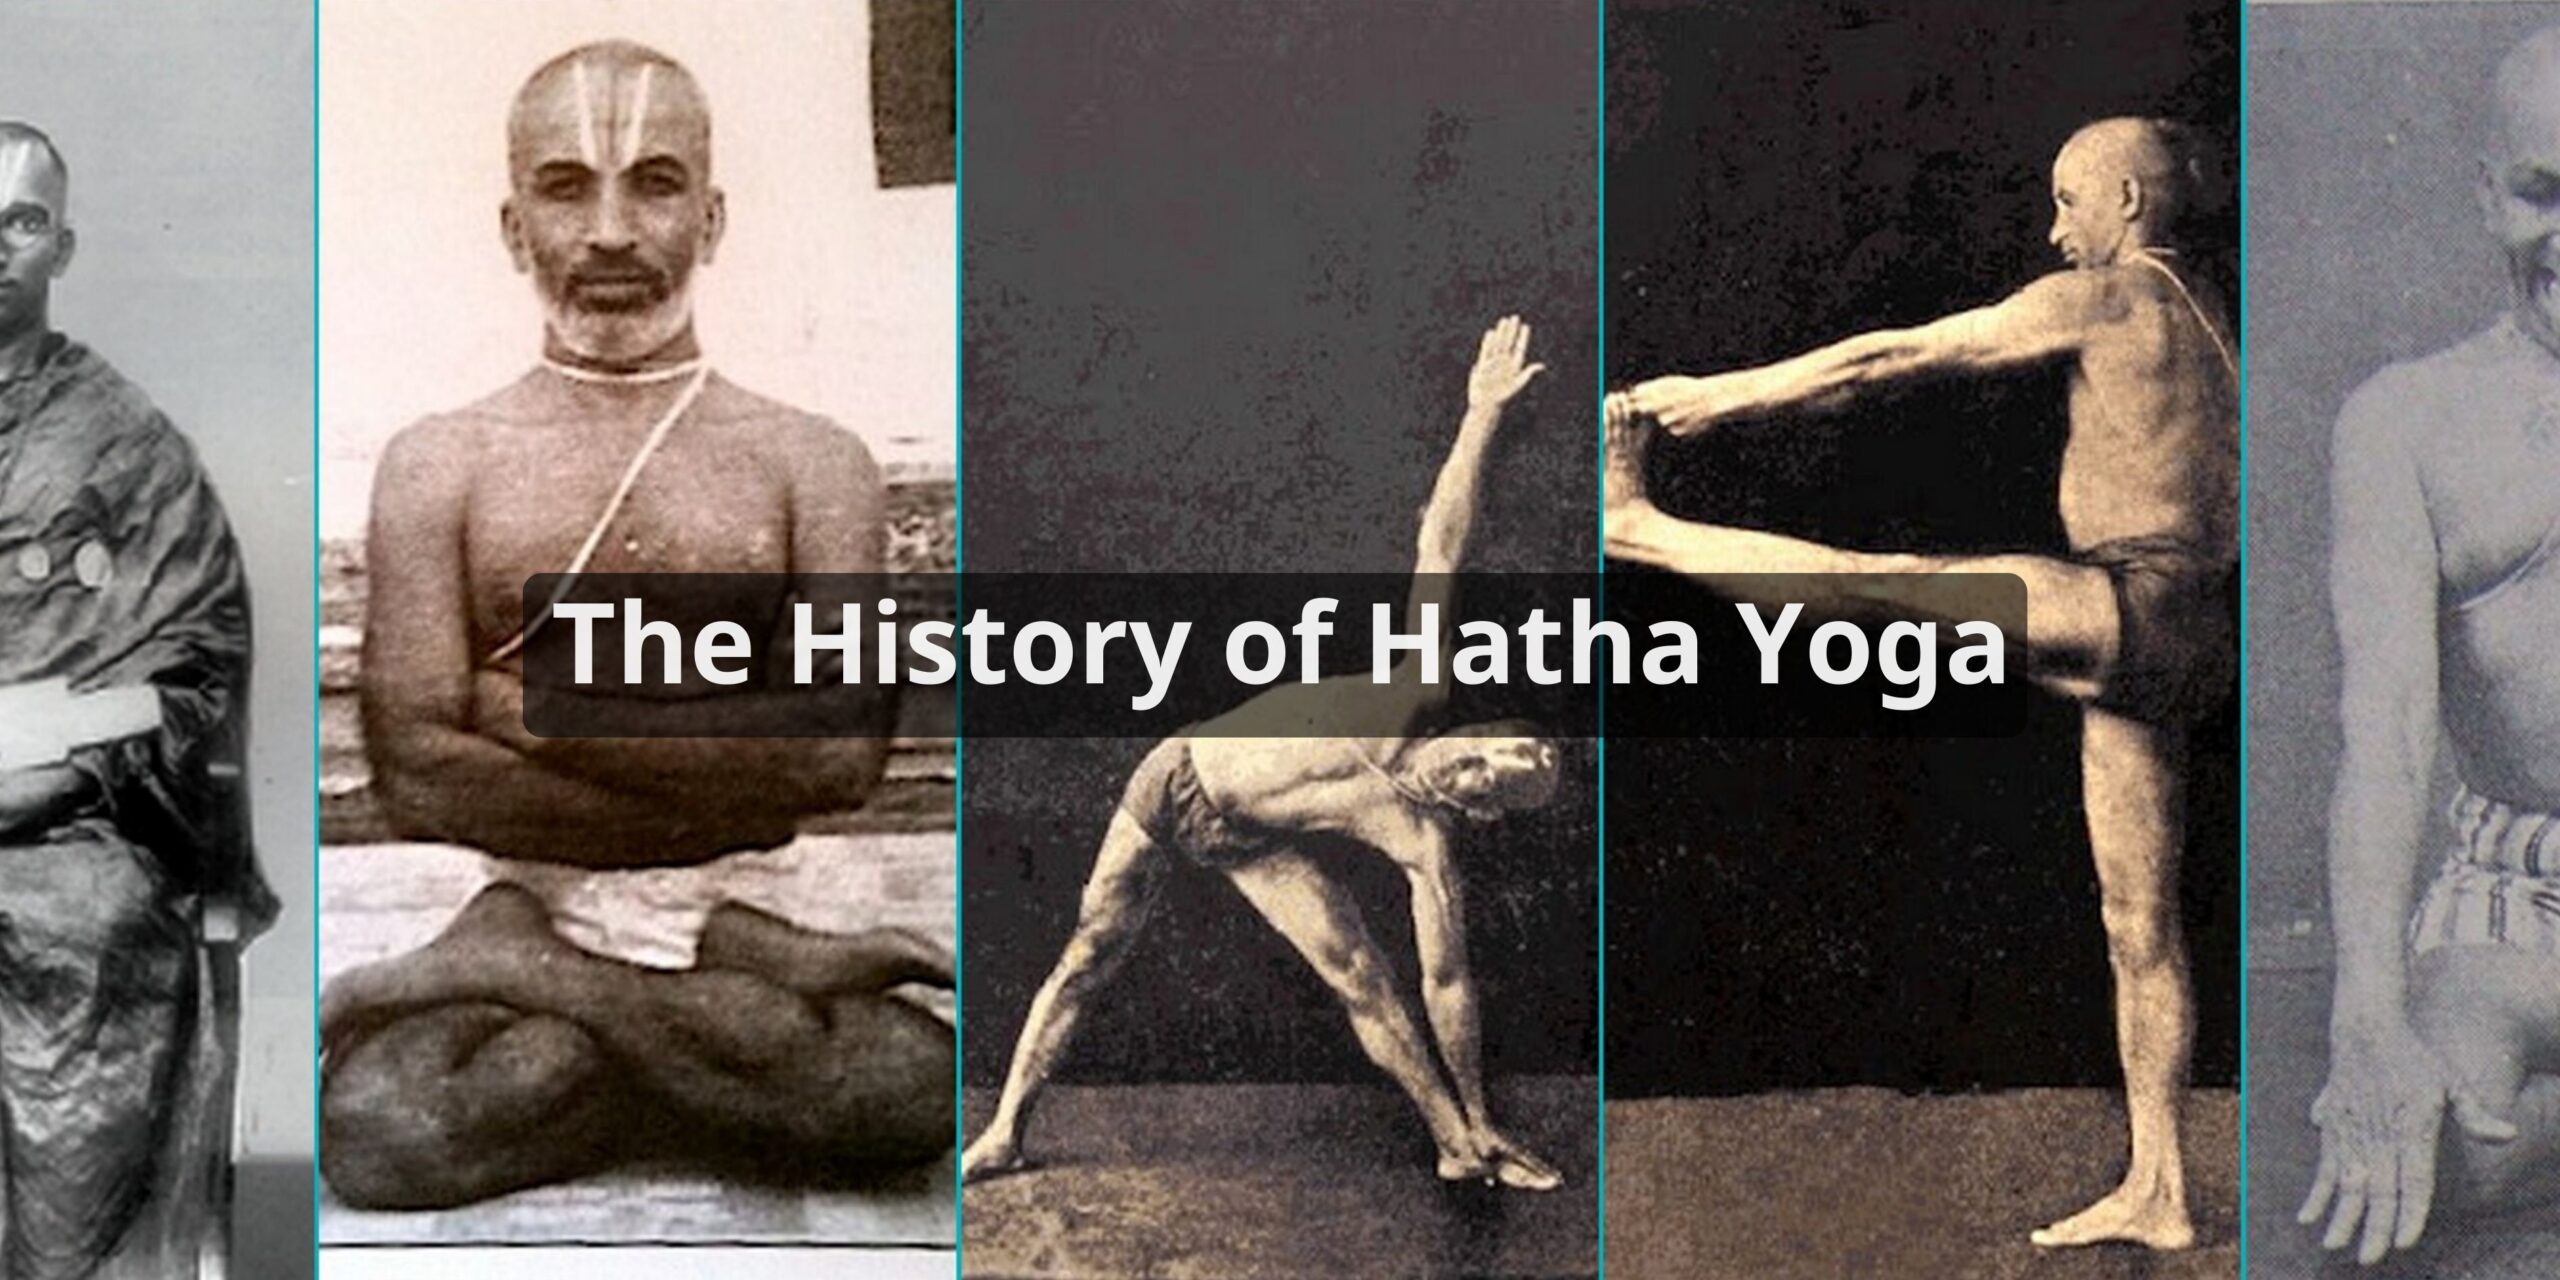 The History of Hatha Yoga